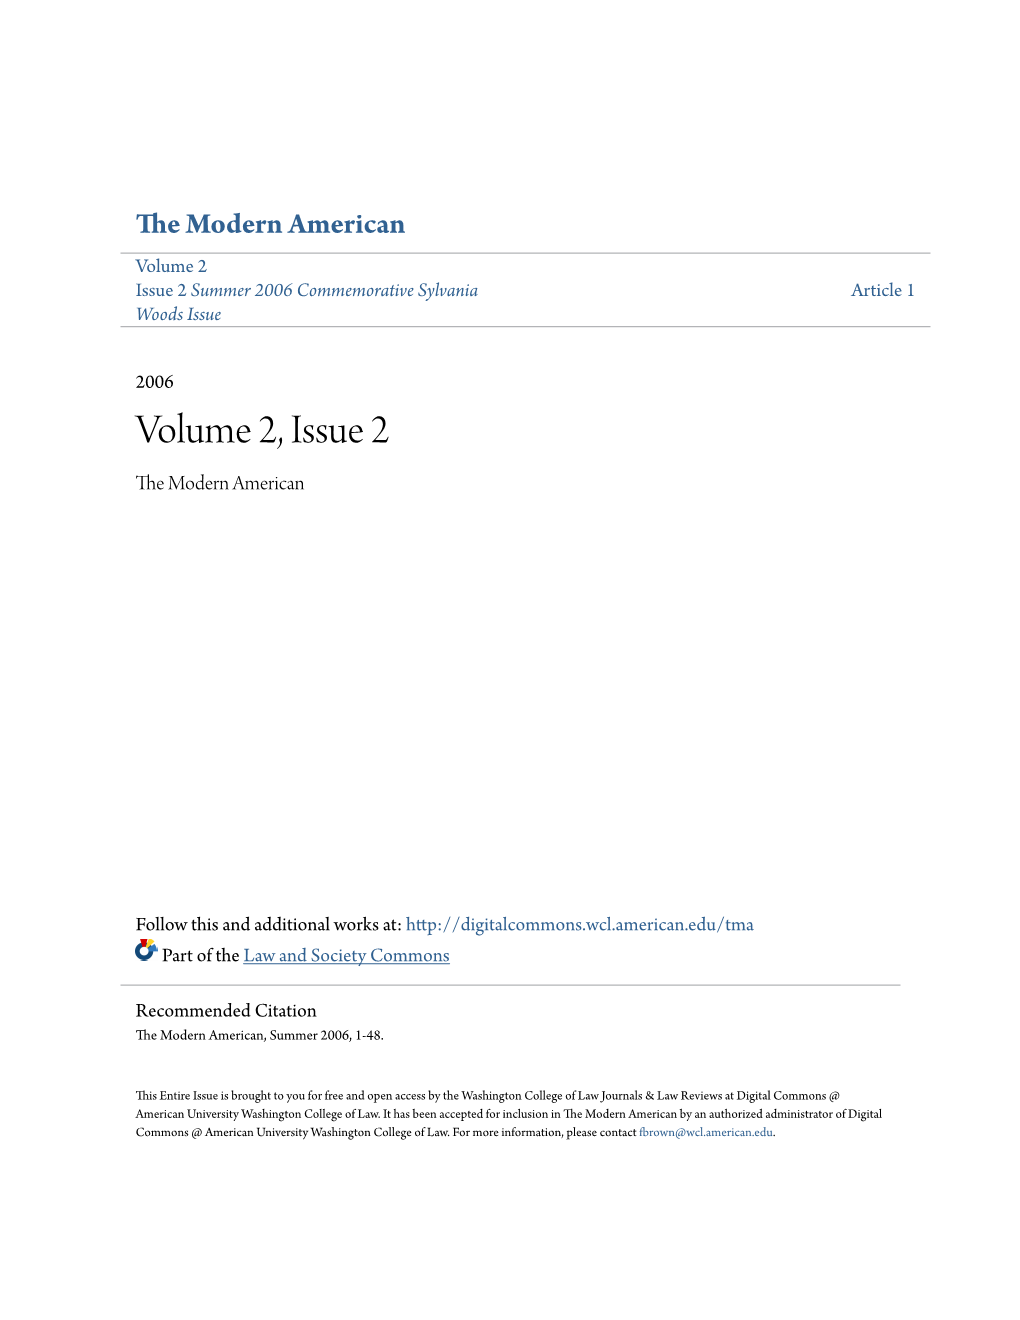 Volume 2, Issue 2 the Om Dern American